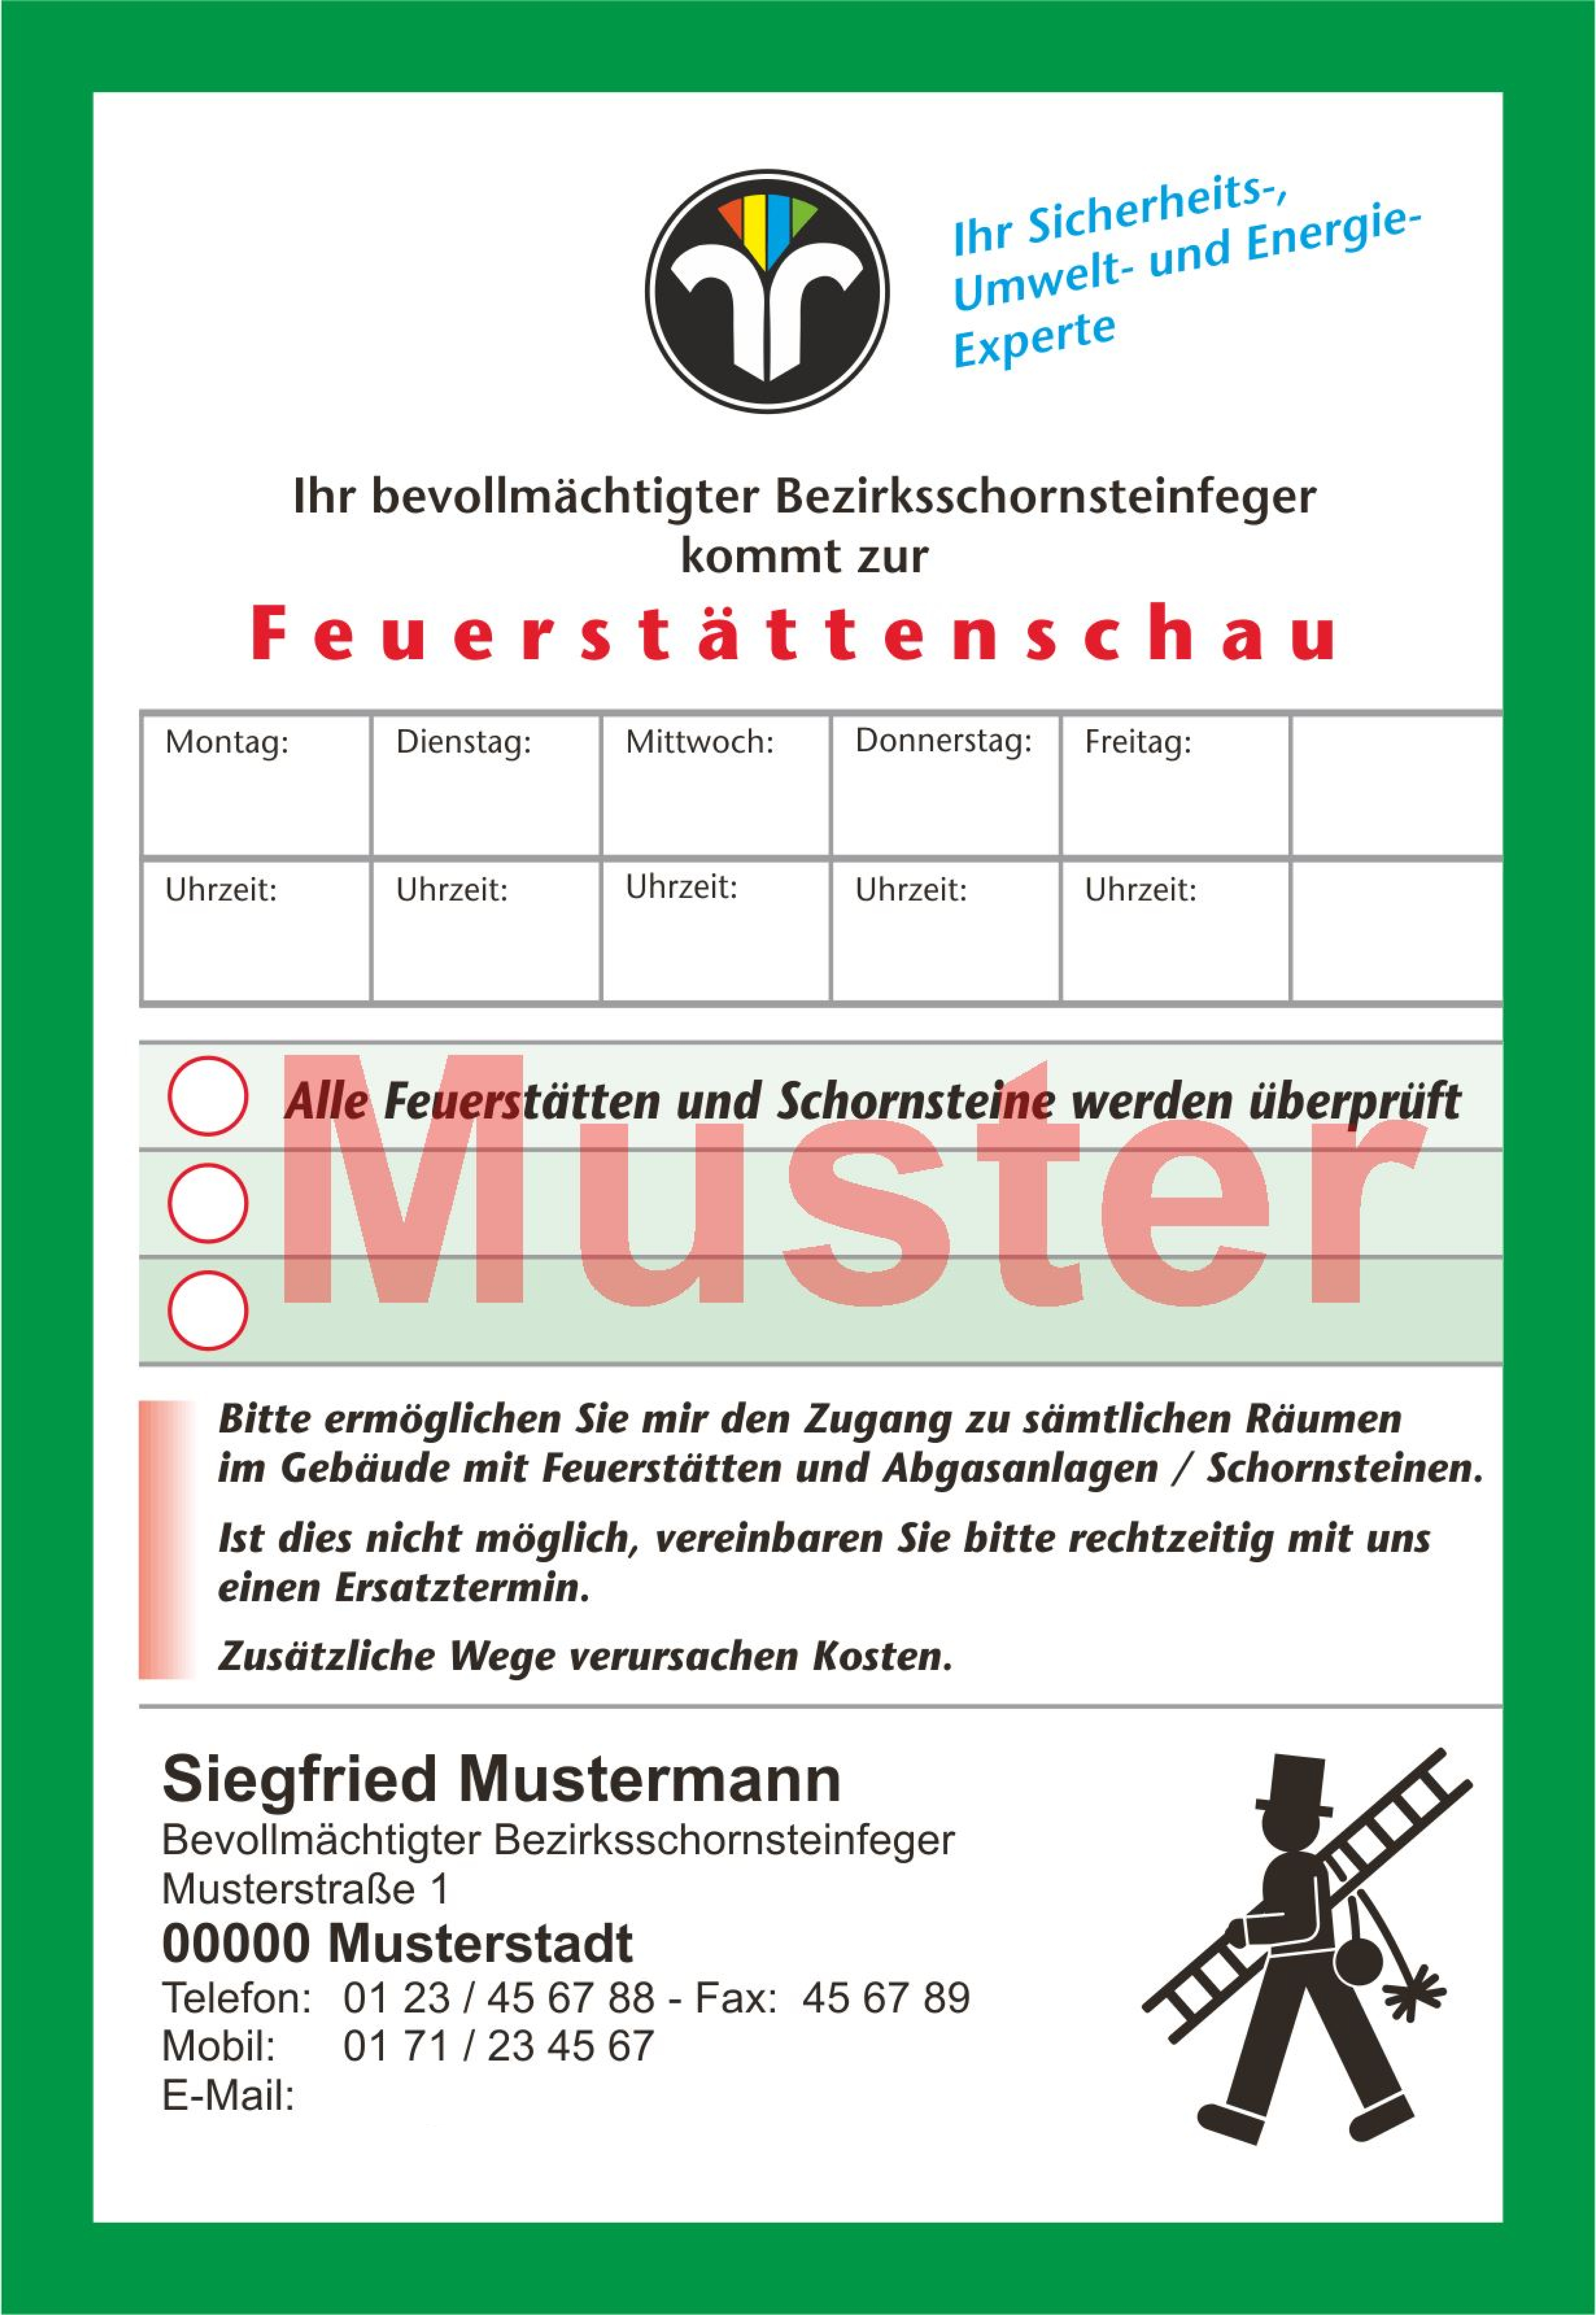 Ansagezettel "Feuerstättenschau", DIN A 6,mit Firmeneindruck